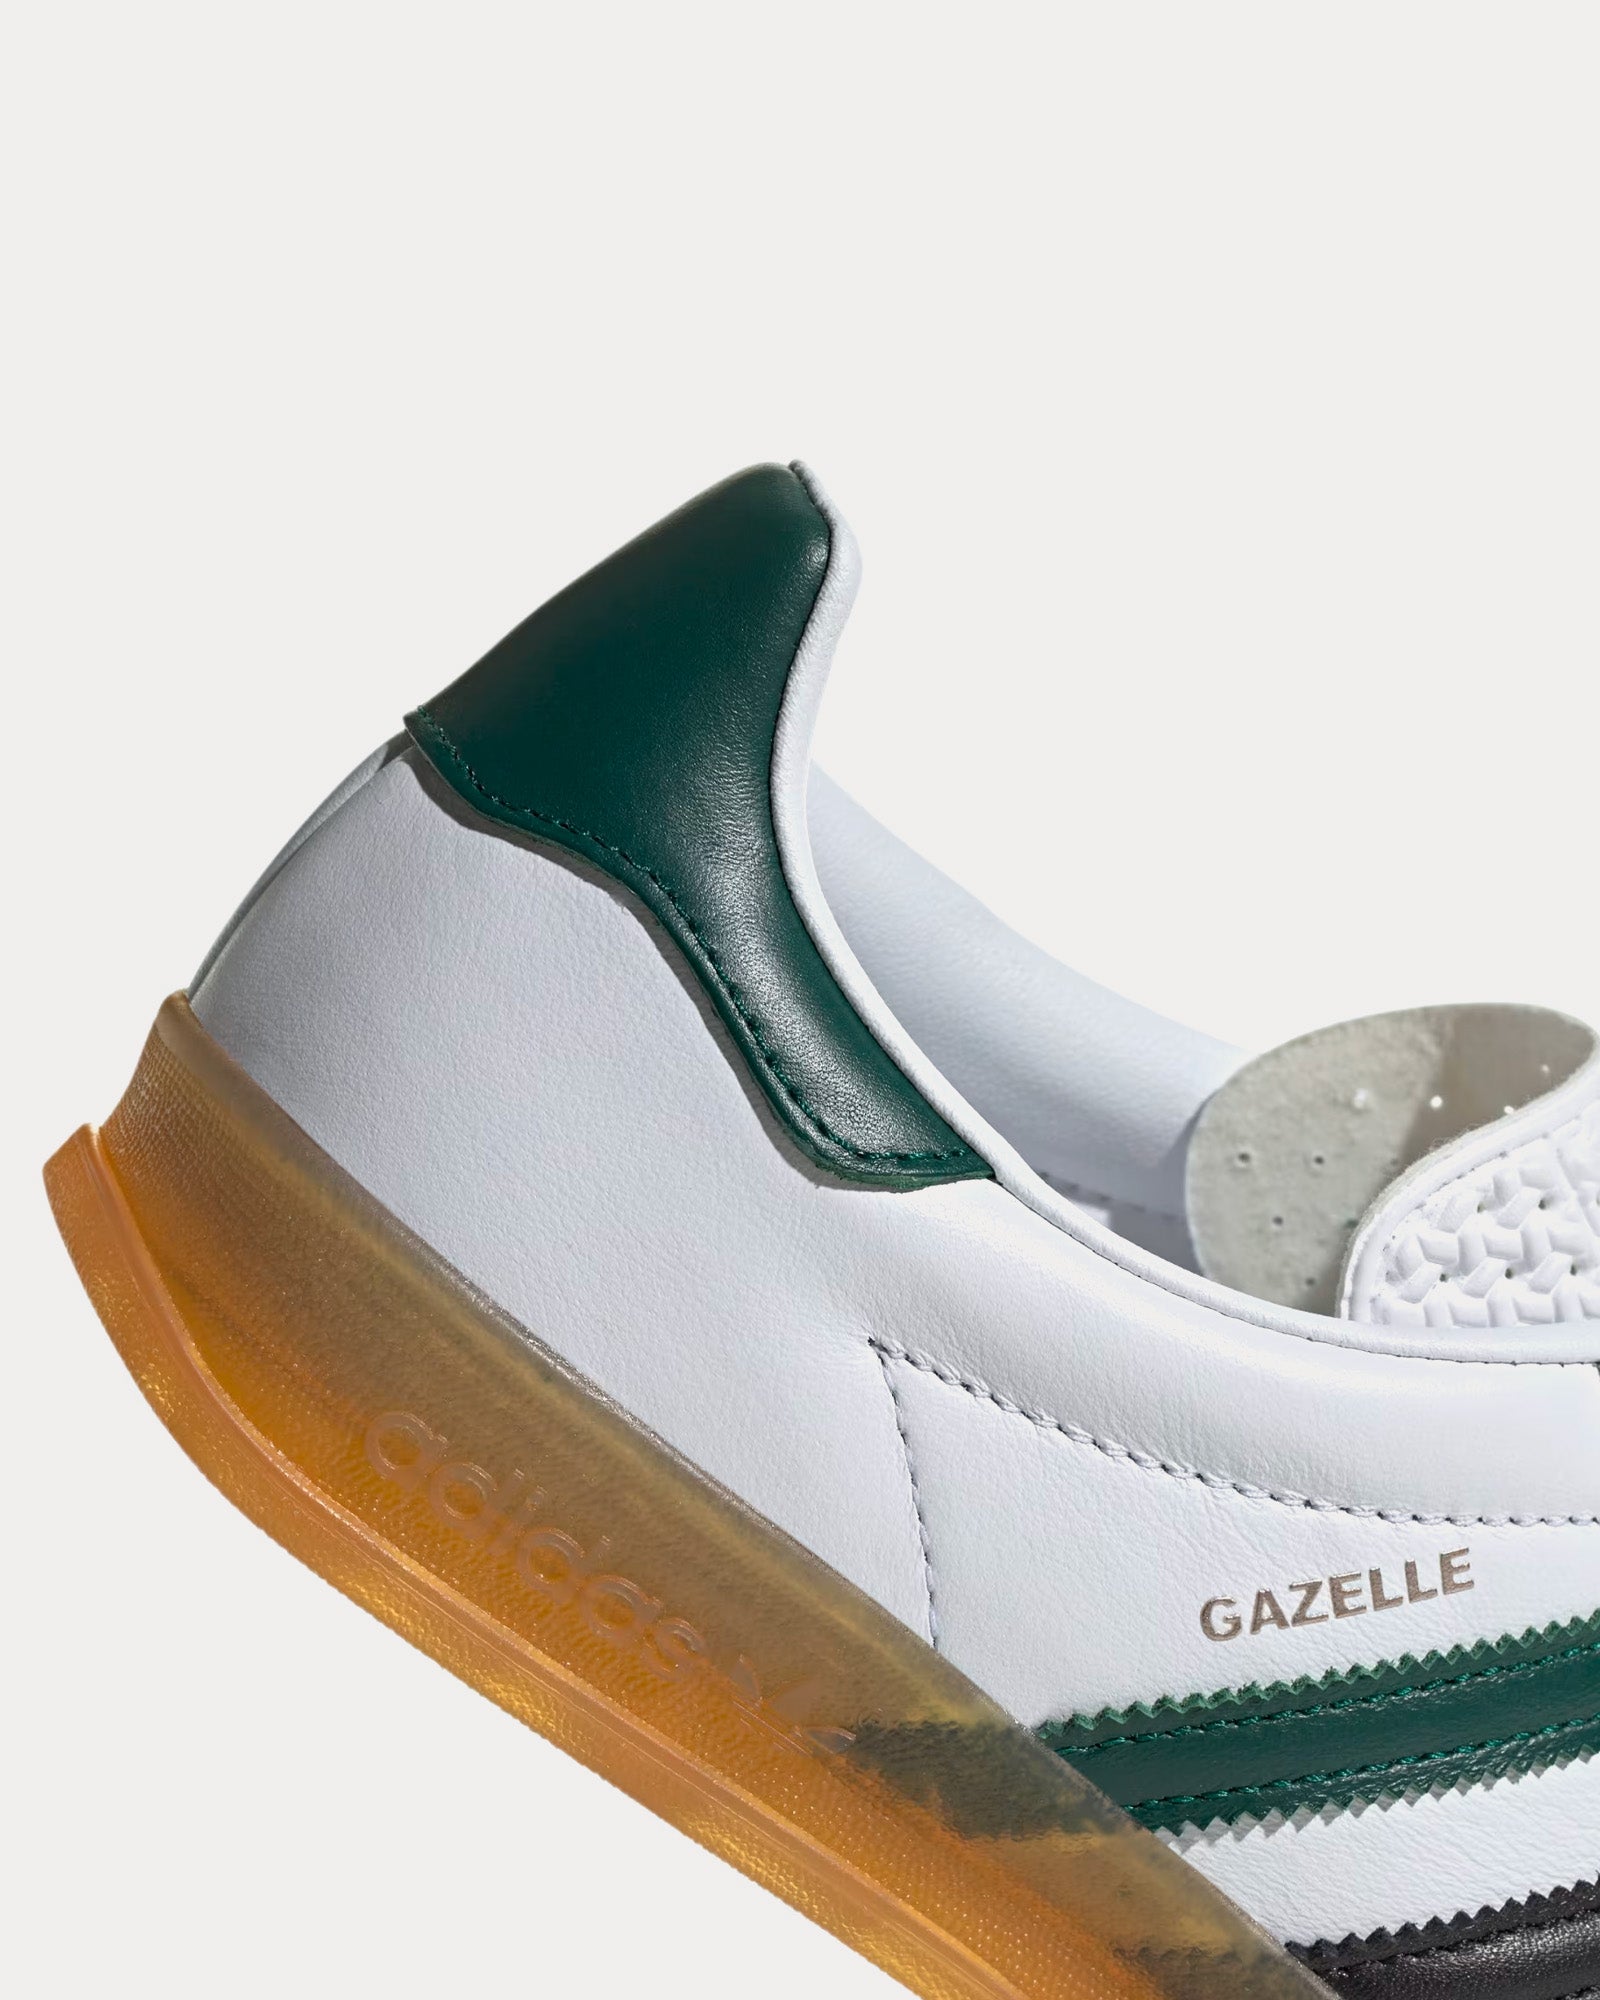 Adidas - Gazelle Indoors Cloud White / Collegiate Green / Core Black Low Top Sneakers